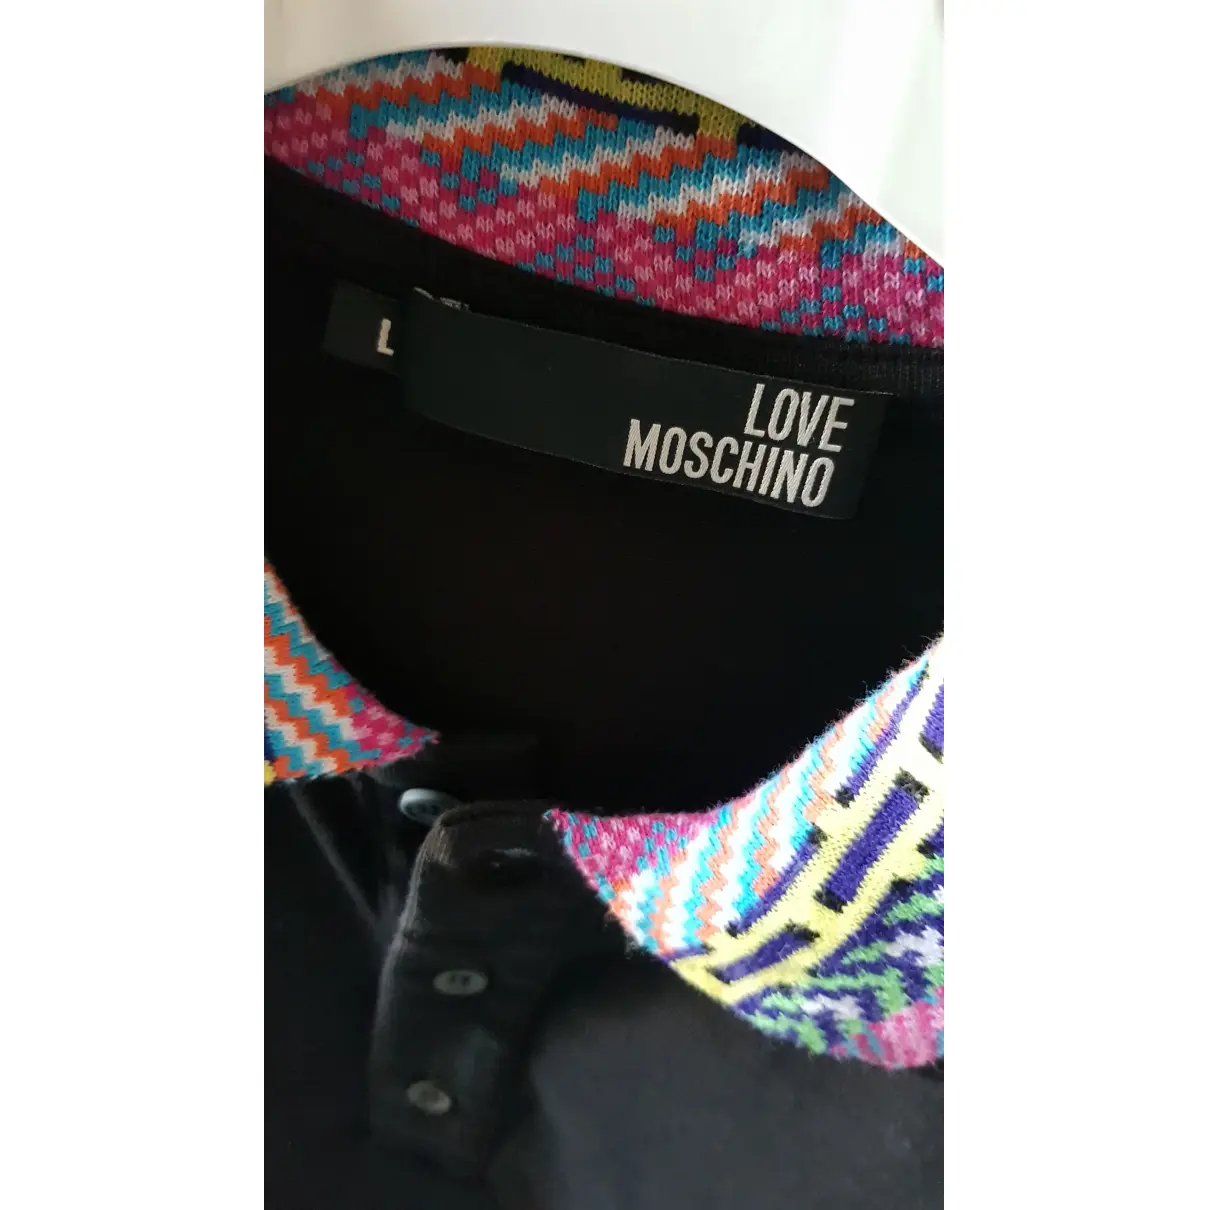 Buy Moschino Love Polo shirt online